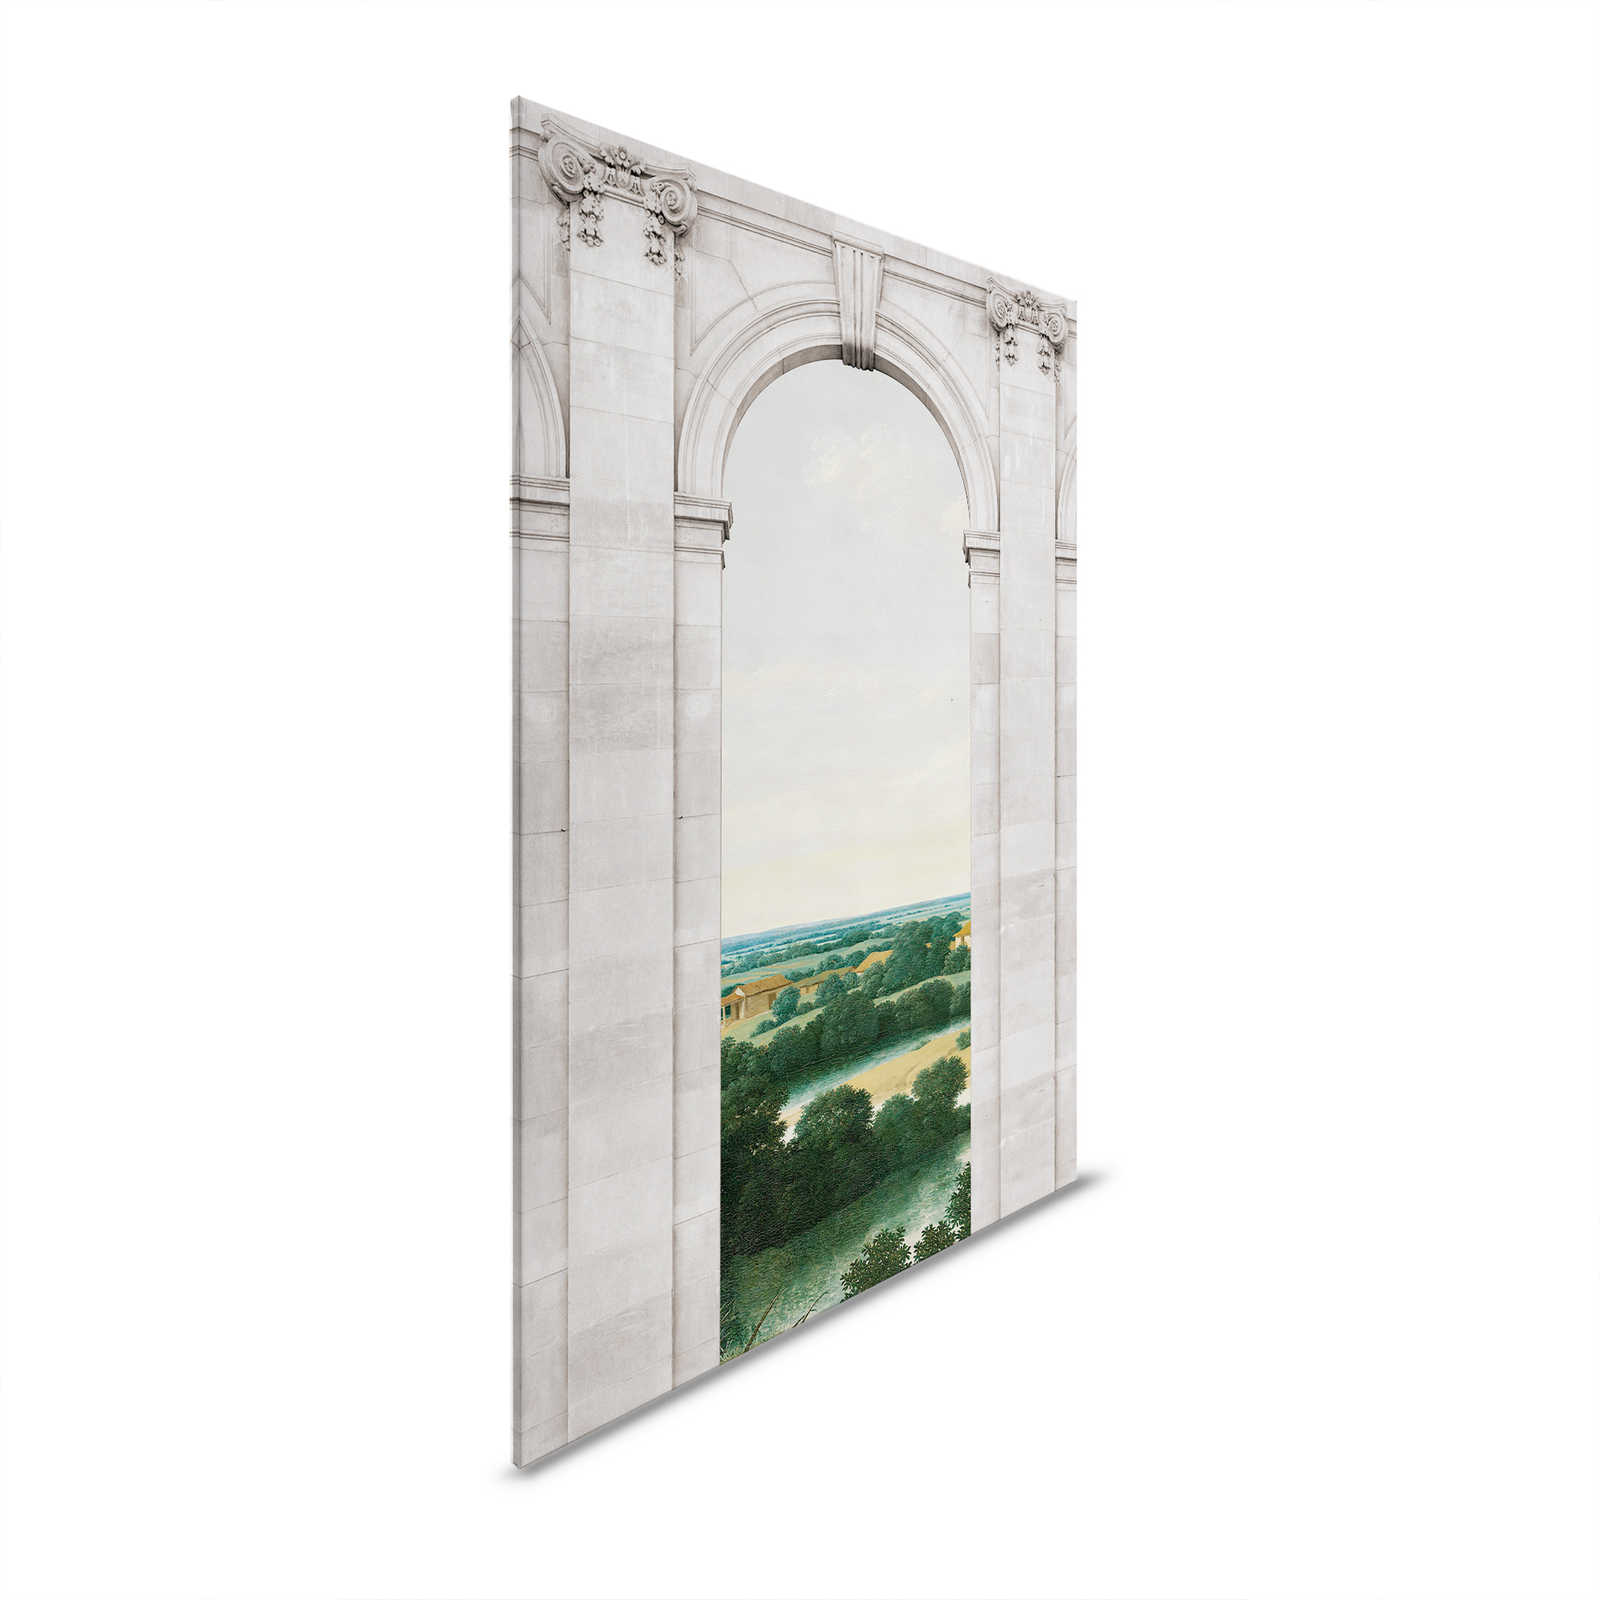 Castello 2 - Fenster Leinwandbild Rundbogen & Ausblick Landschaft – 1,20 m x 0,80 m
